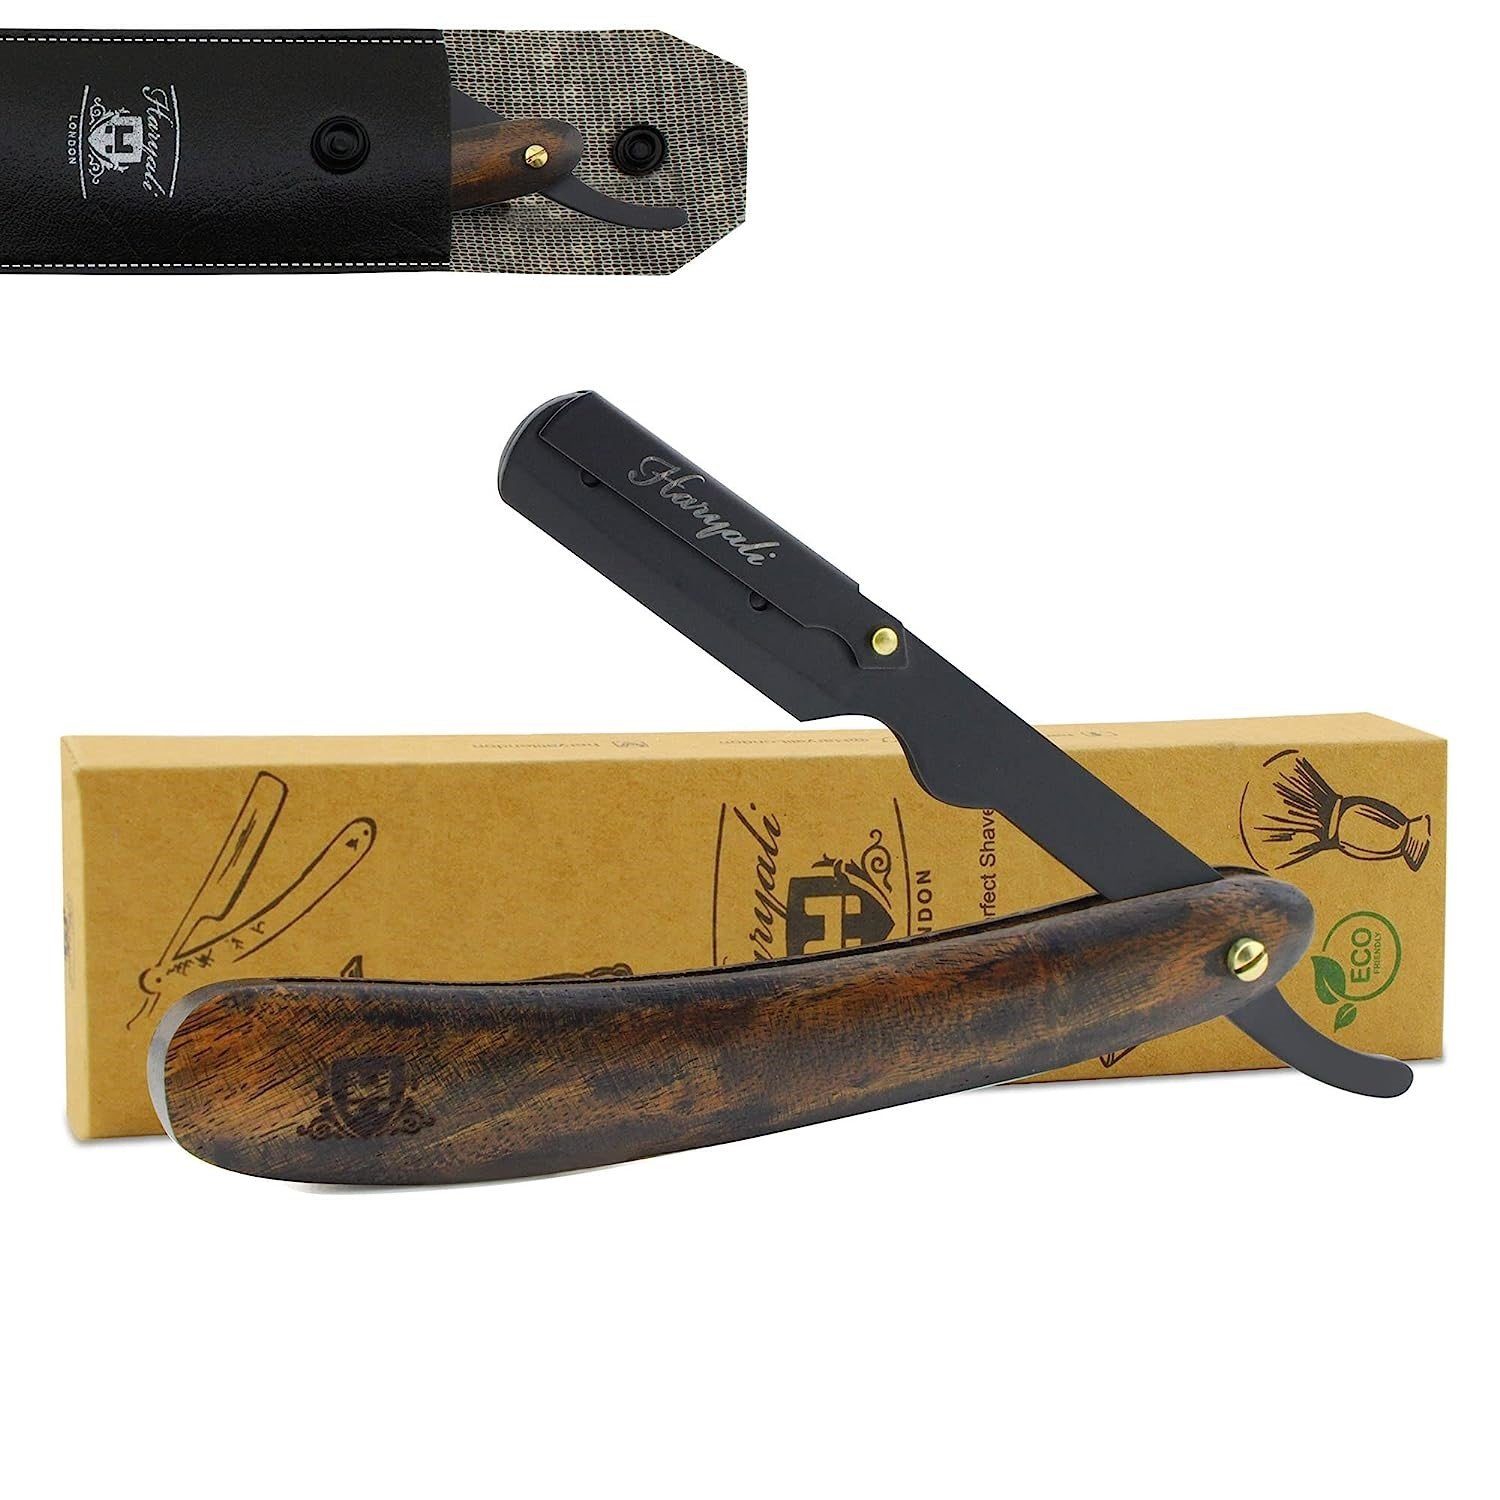 Haryali London Rasiermesser Haryali London Rasiermesser mit Holzgriff - Nachhaltige Bartmesser